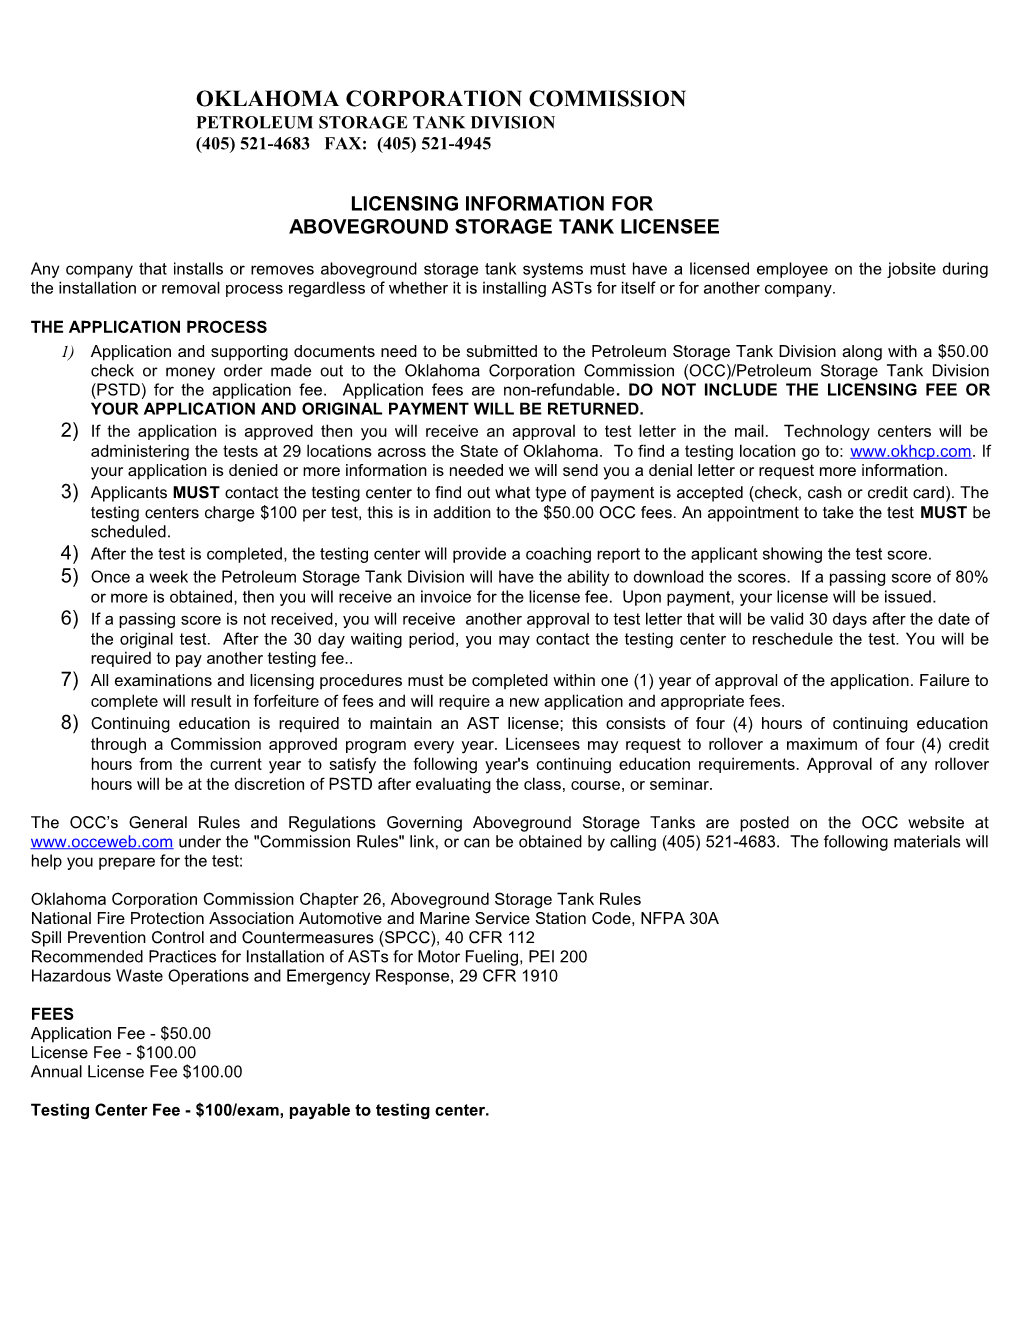 Licensing Information for Aboveground Storage Tanks